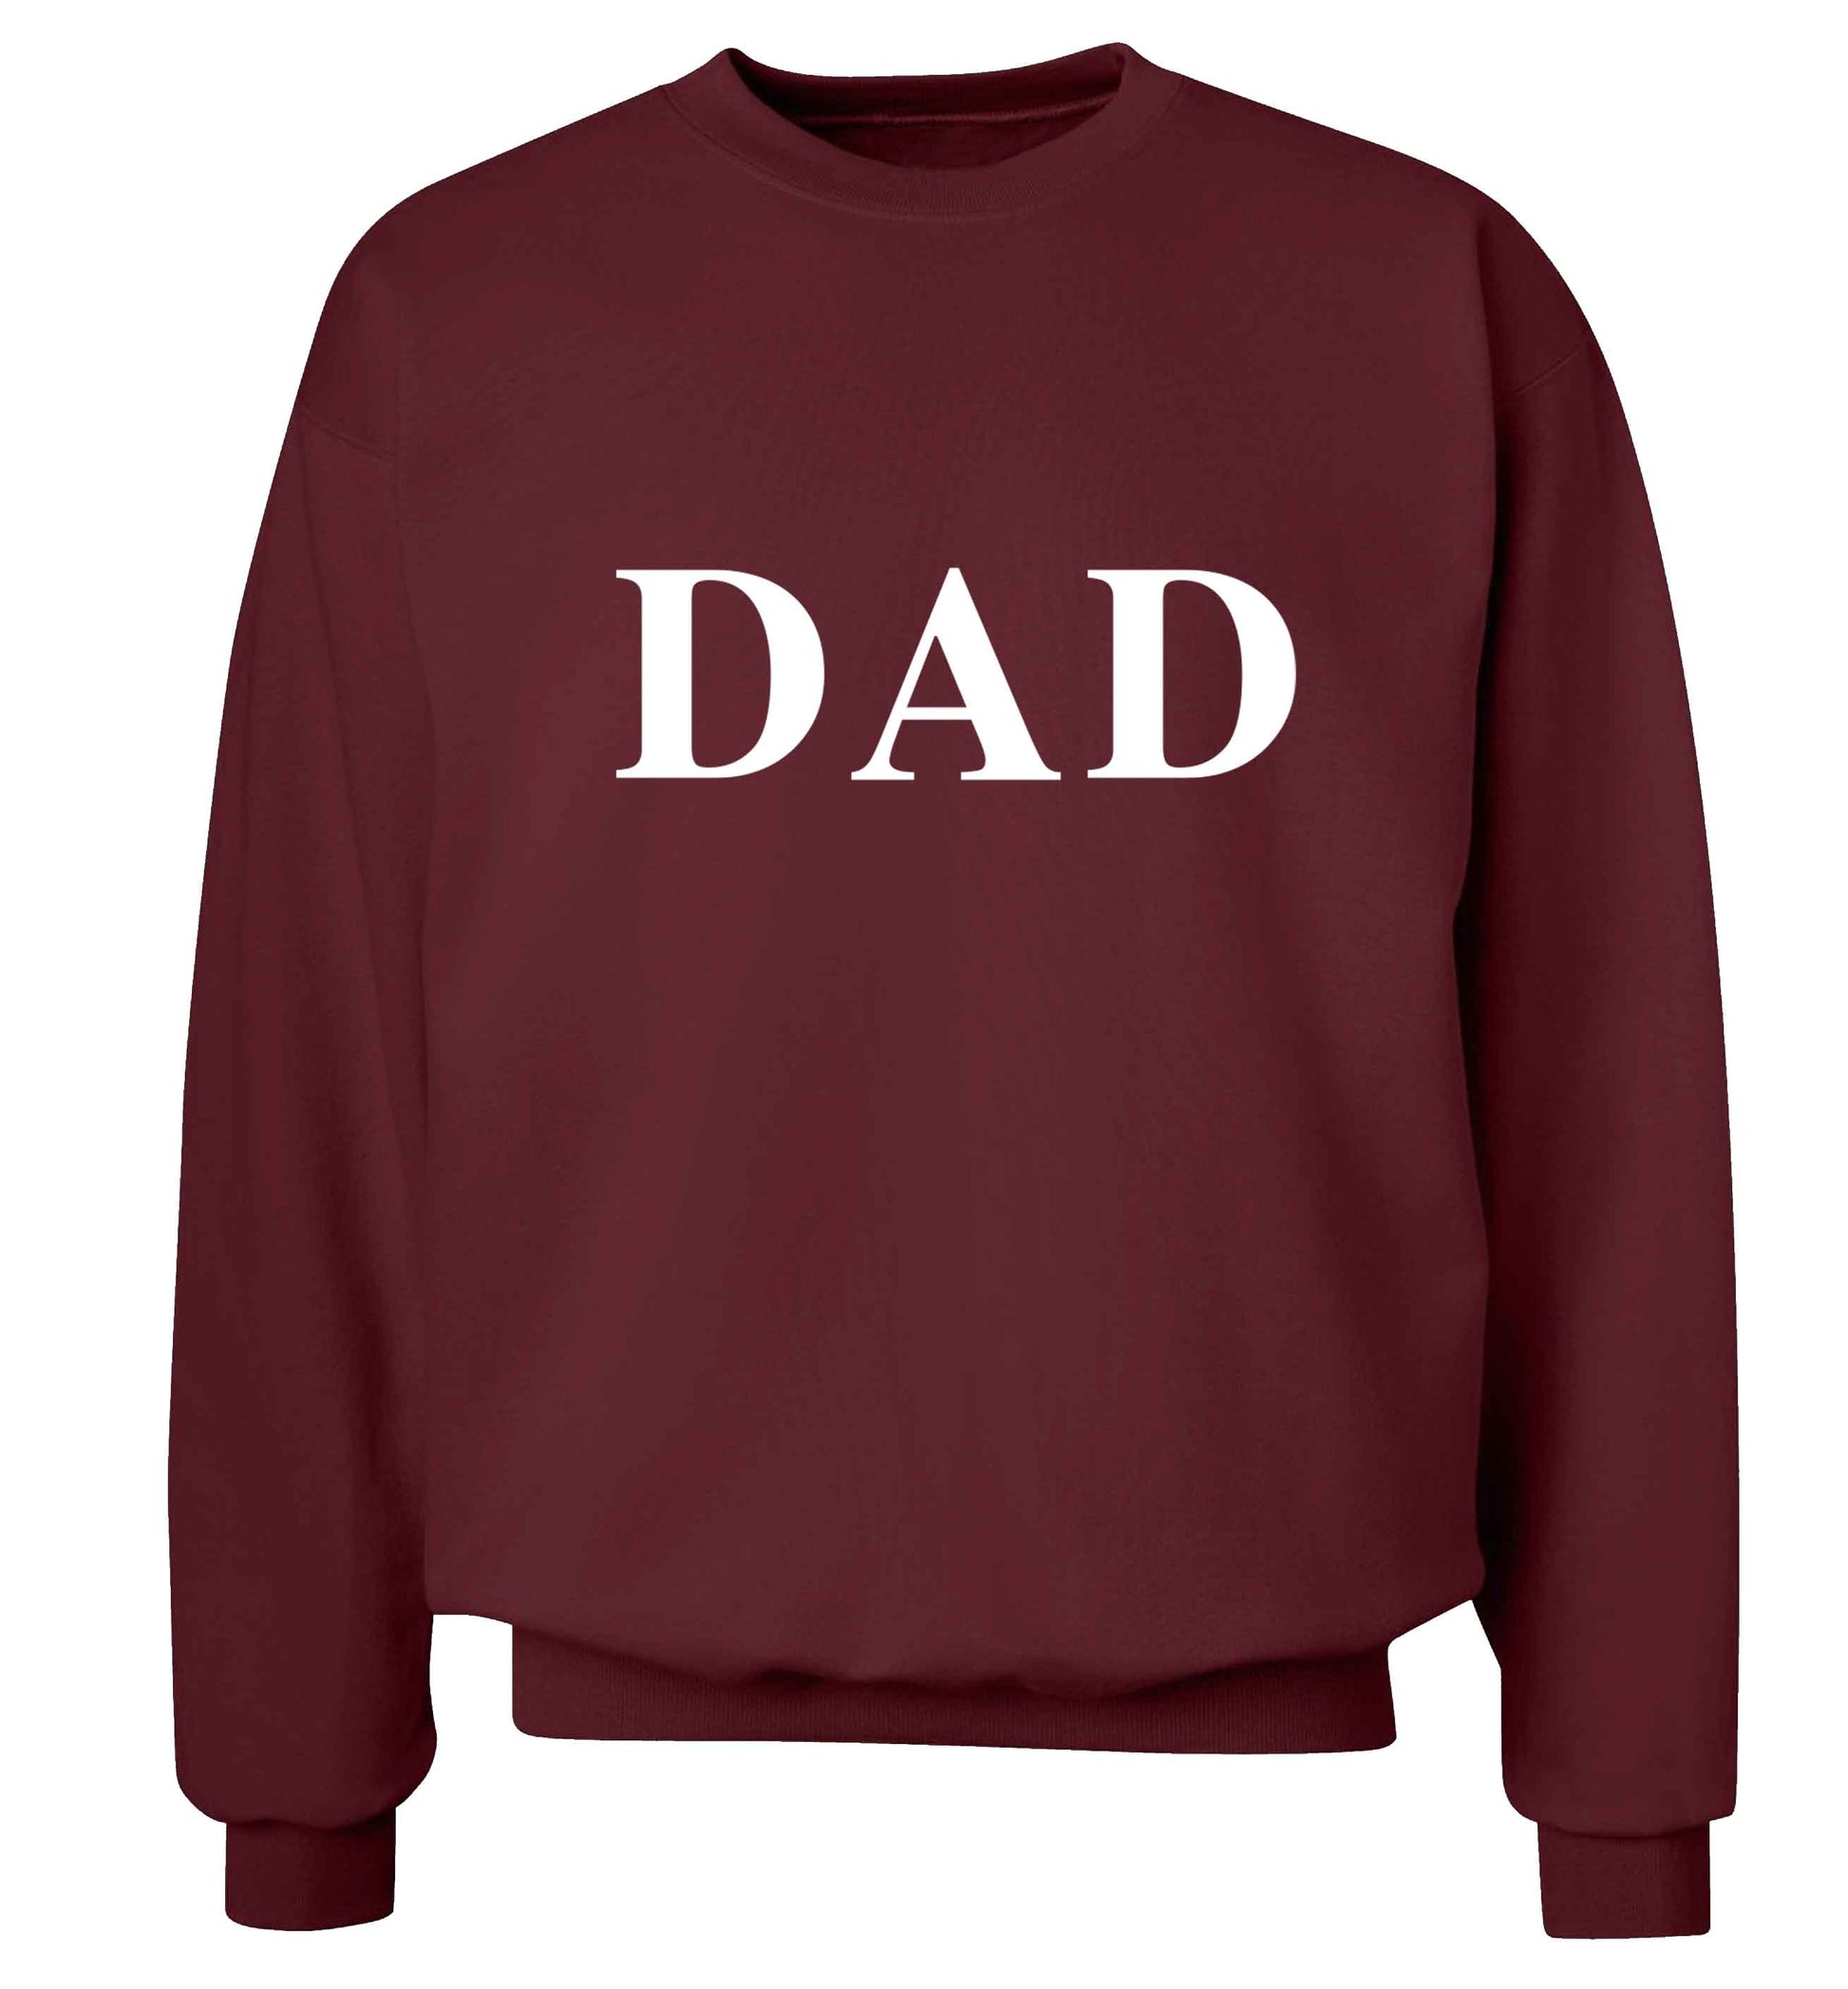 Dad adult's unisex maroon sweater 2XL